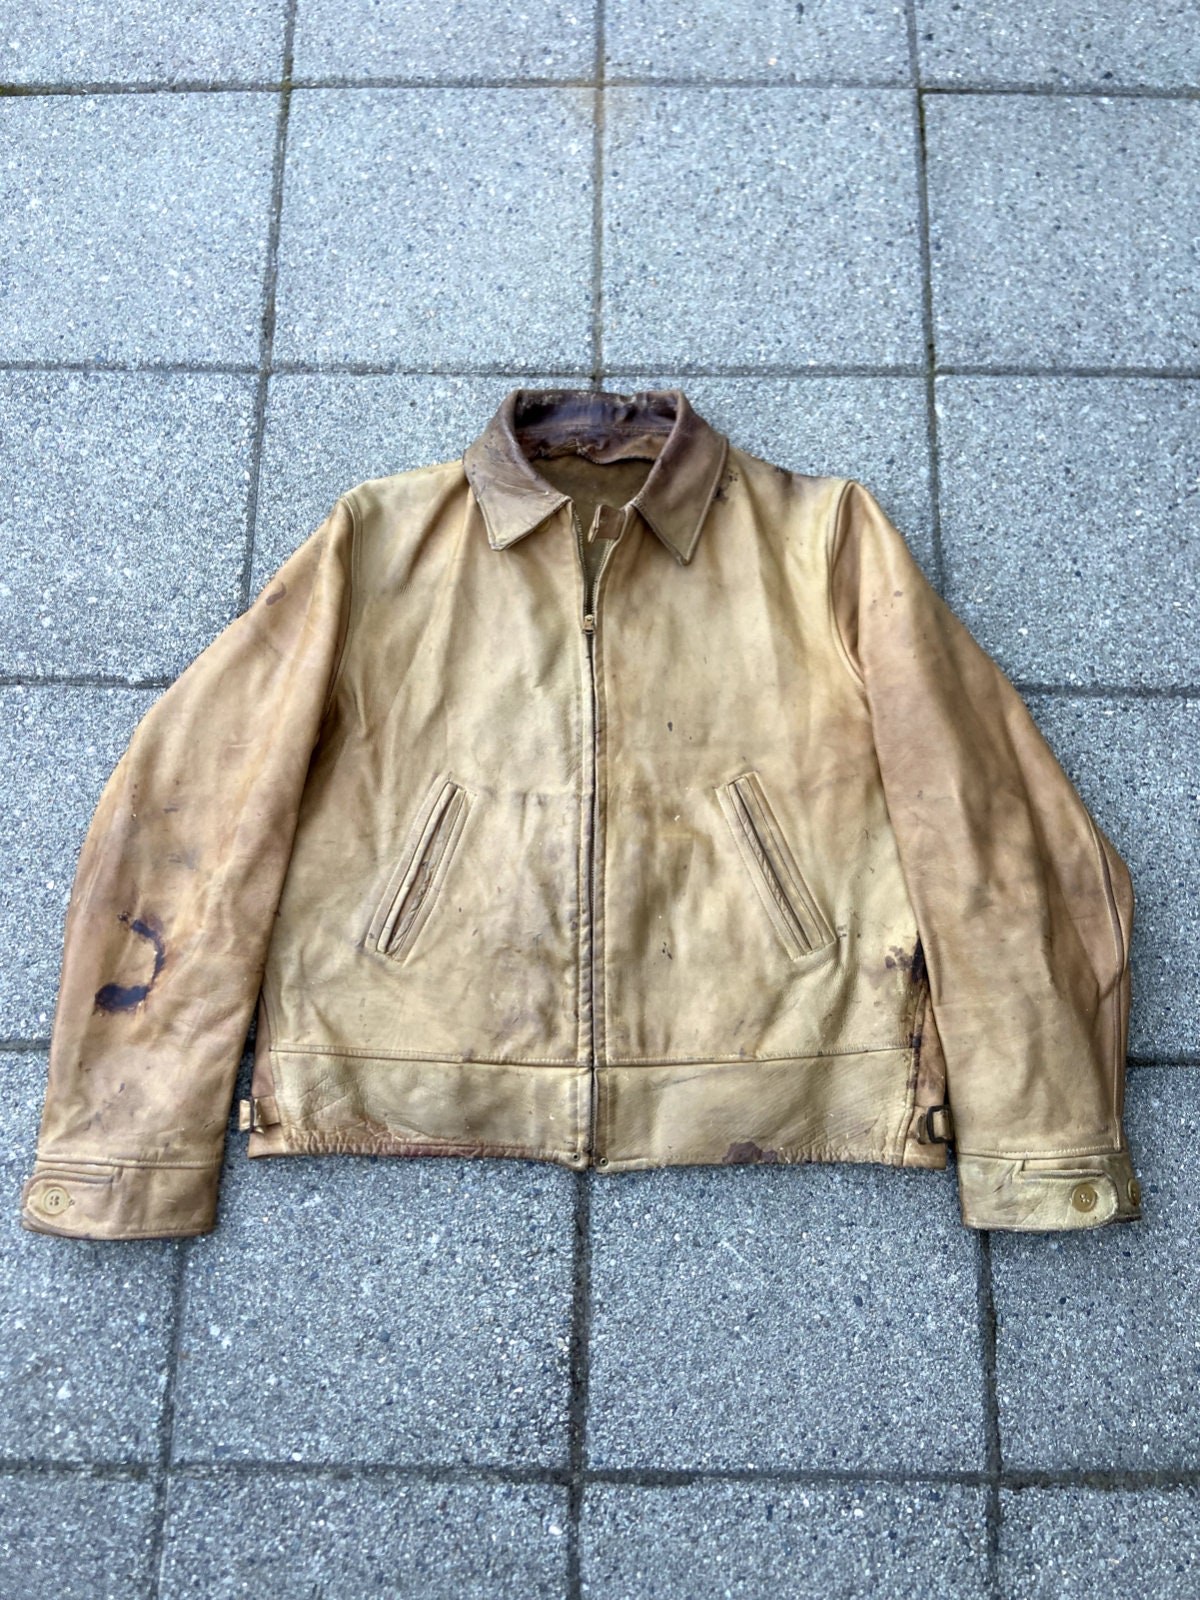 LEVIS LVC CLOTHING Horsehide Leather Jacket Brown Size 40 VINTAGE Japan Used